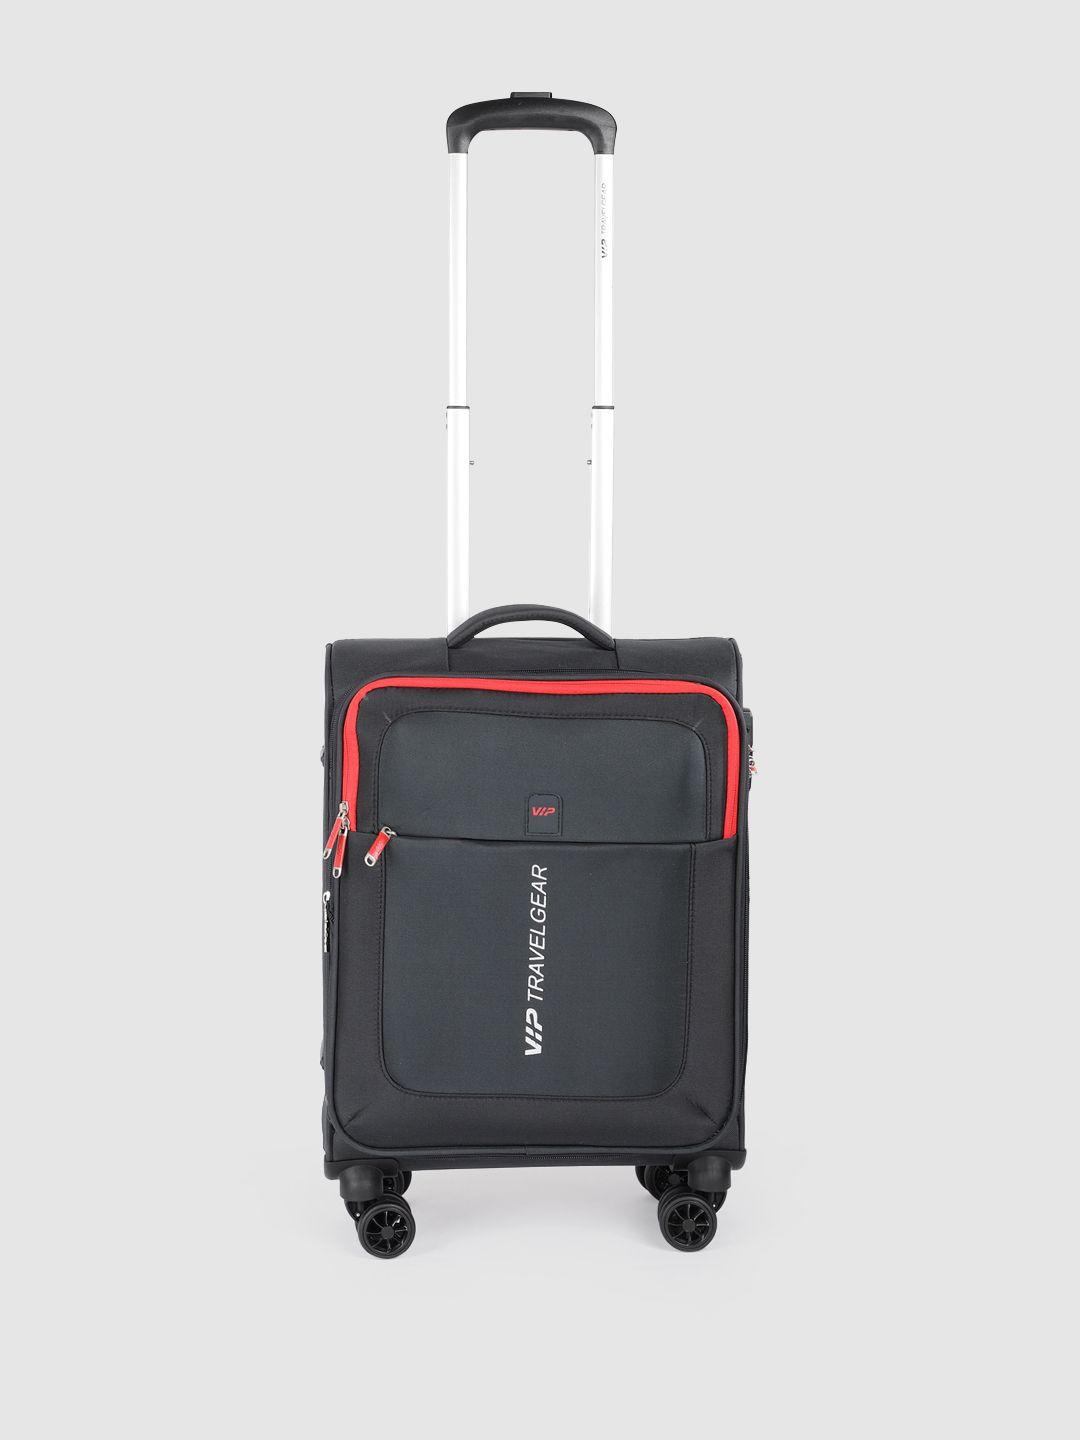 vip suprema 8w minimal brand logo printed soft-sided cabin trolley suitcase